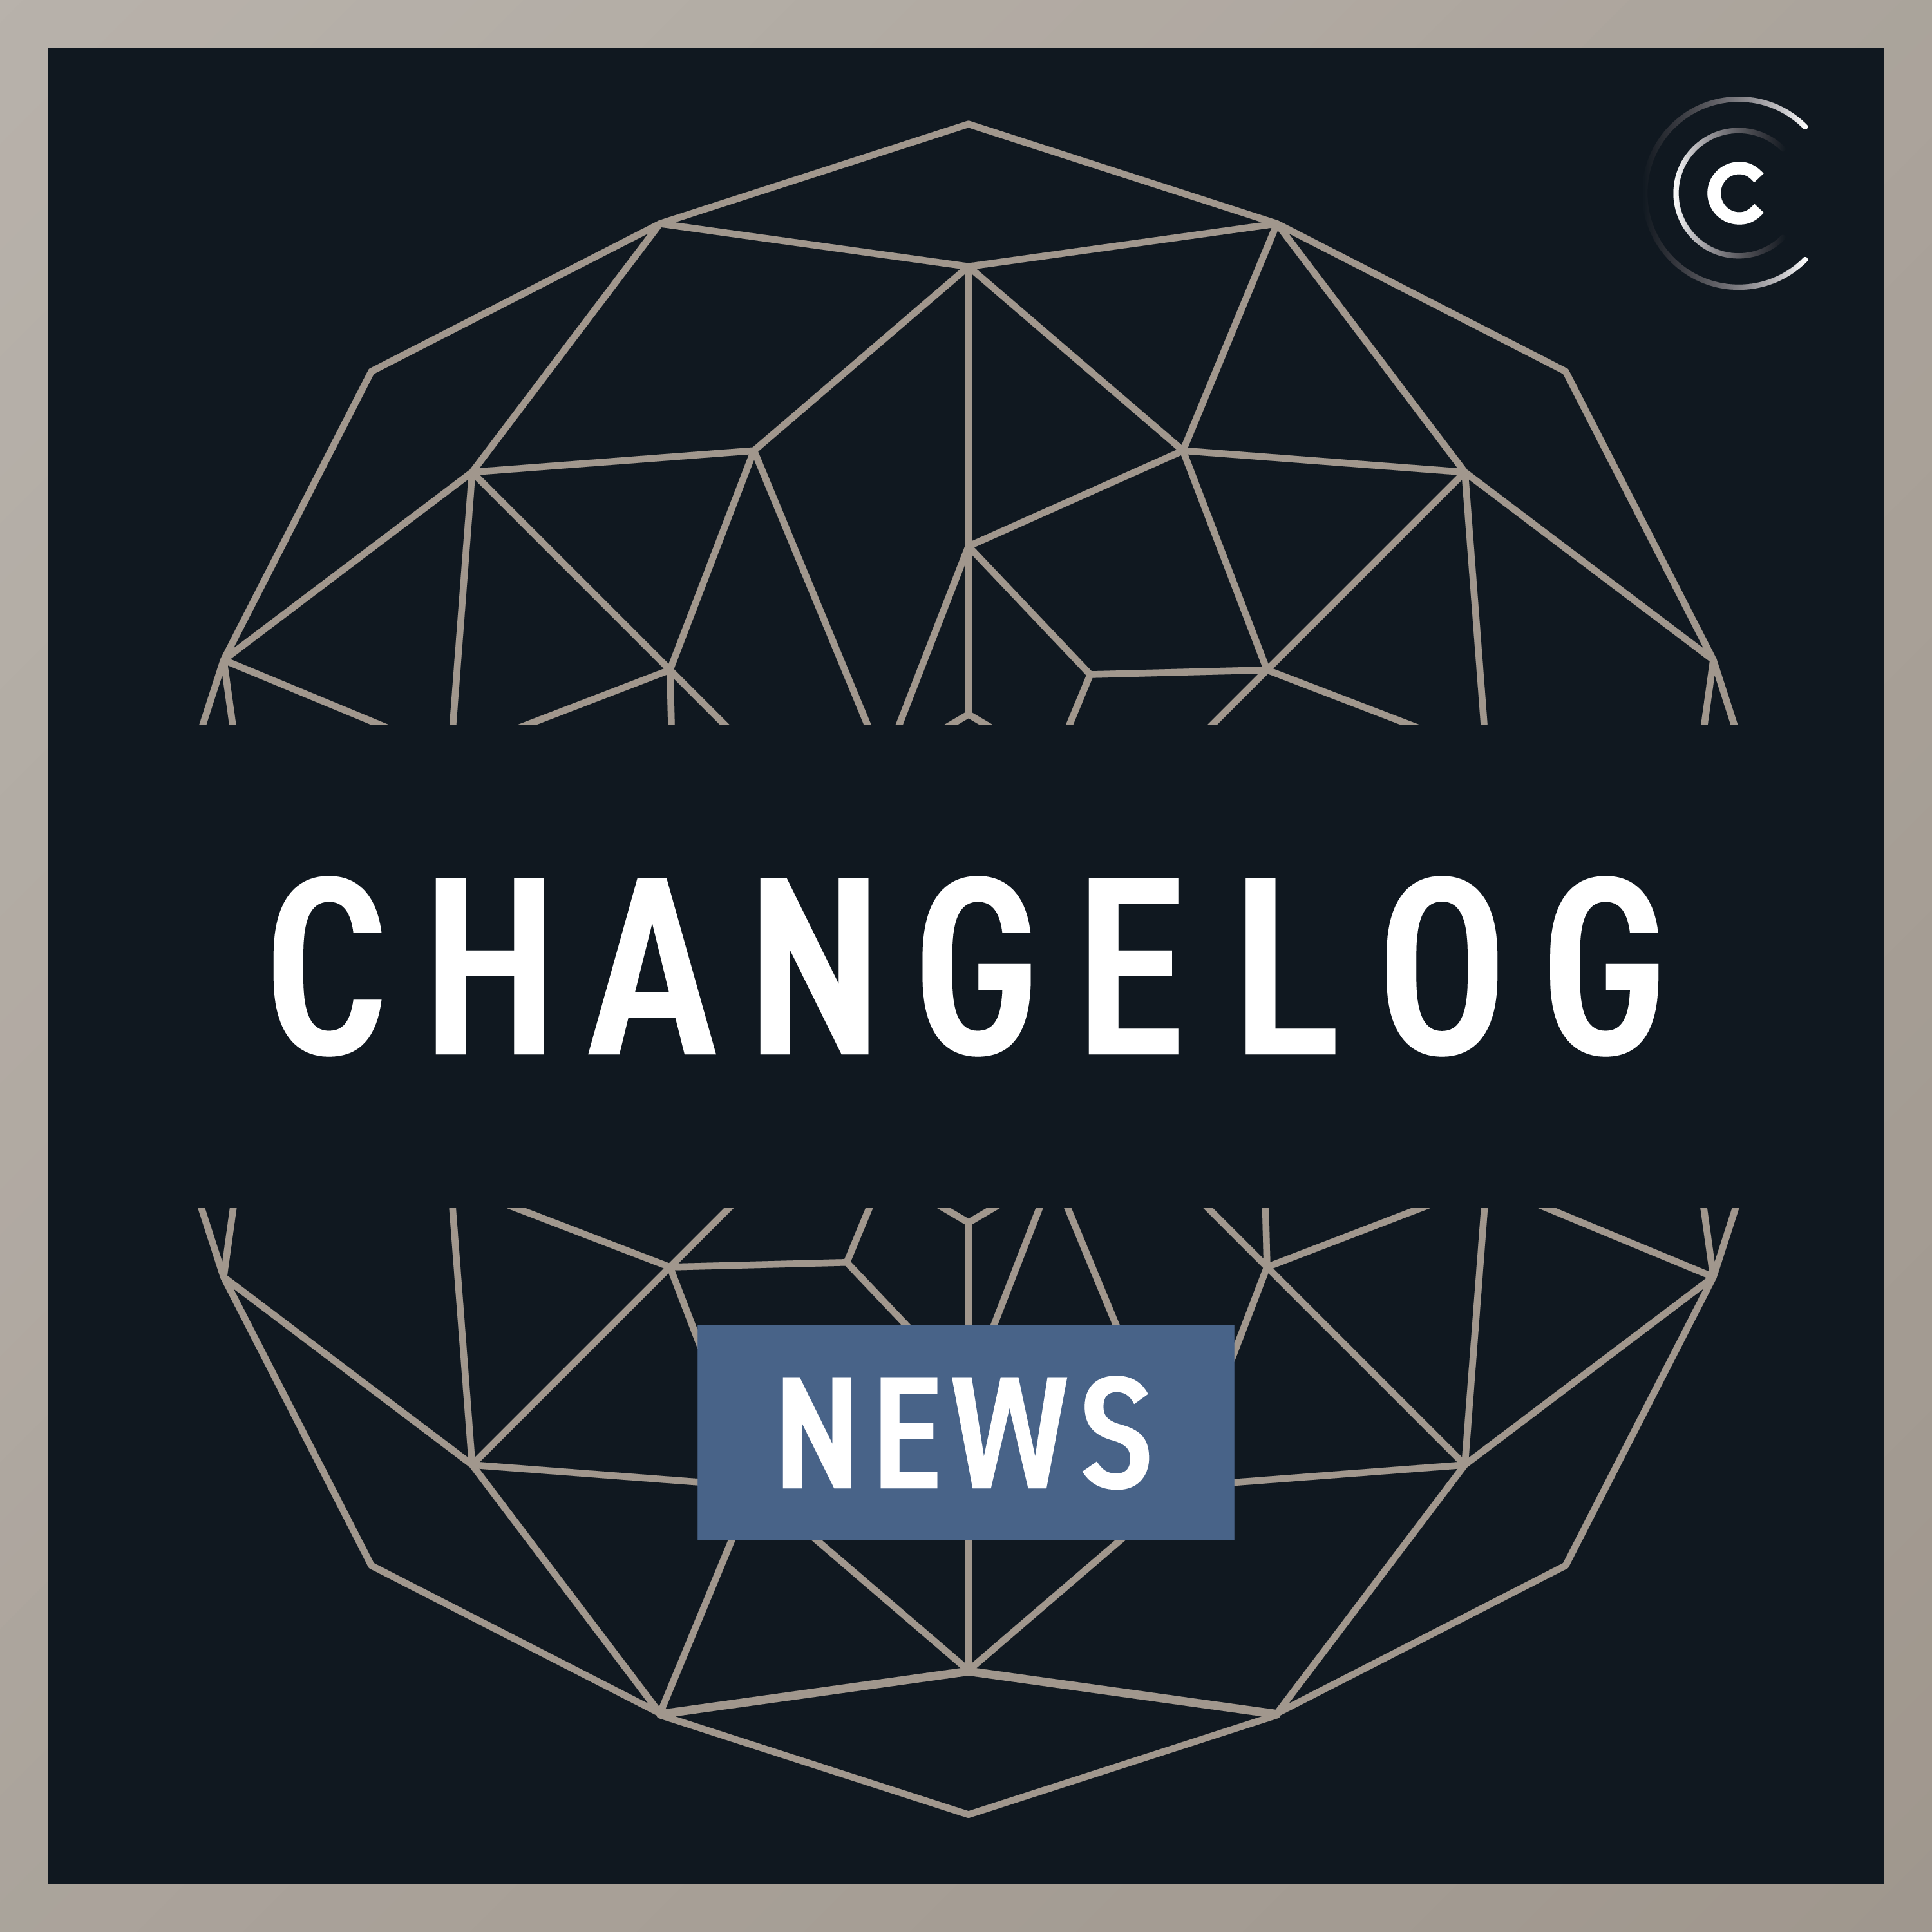 Changelog News